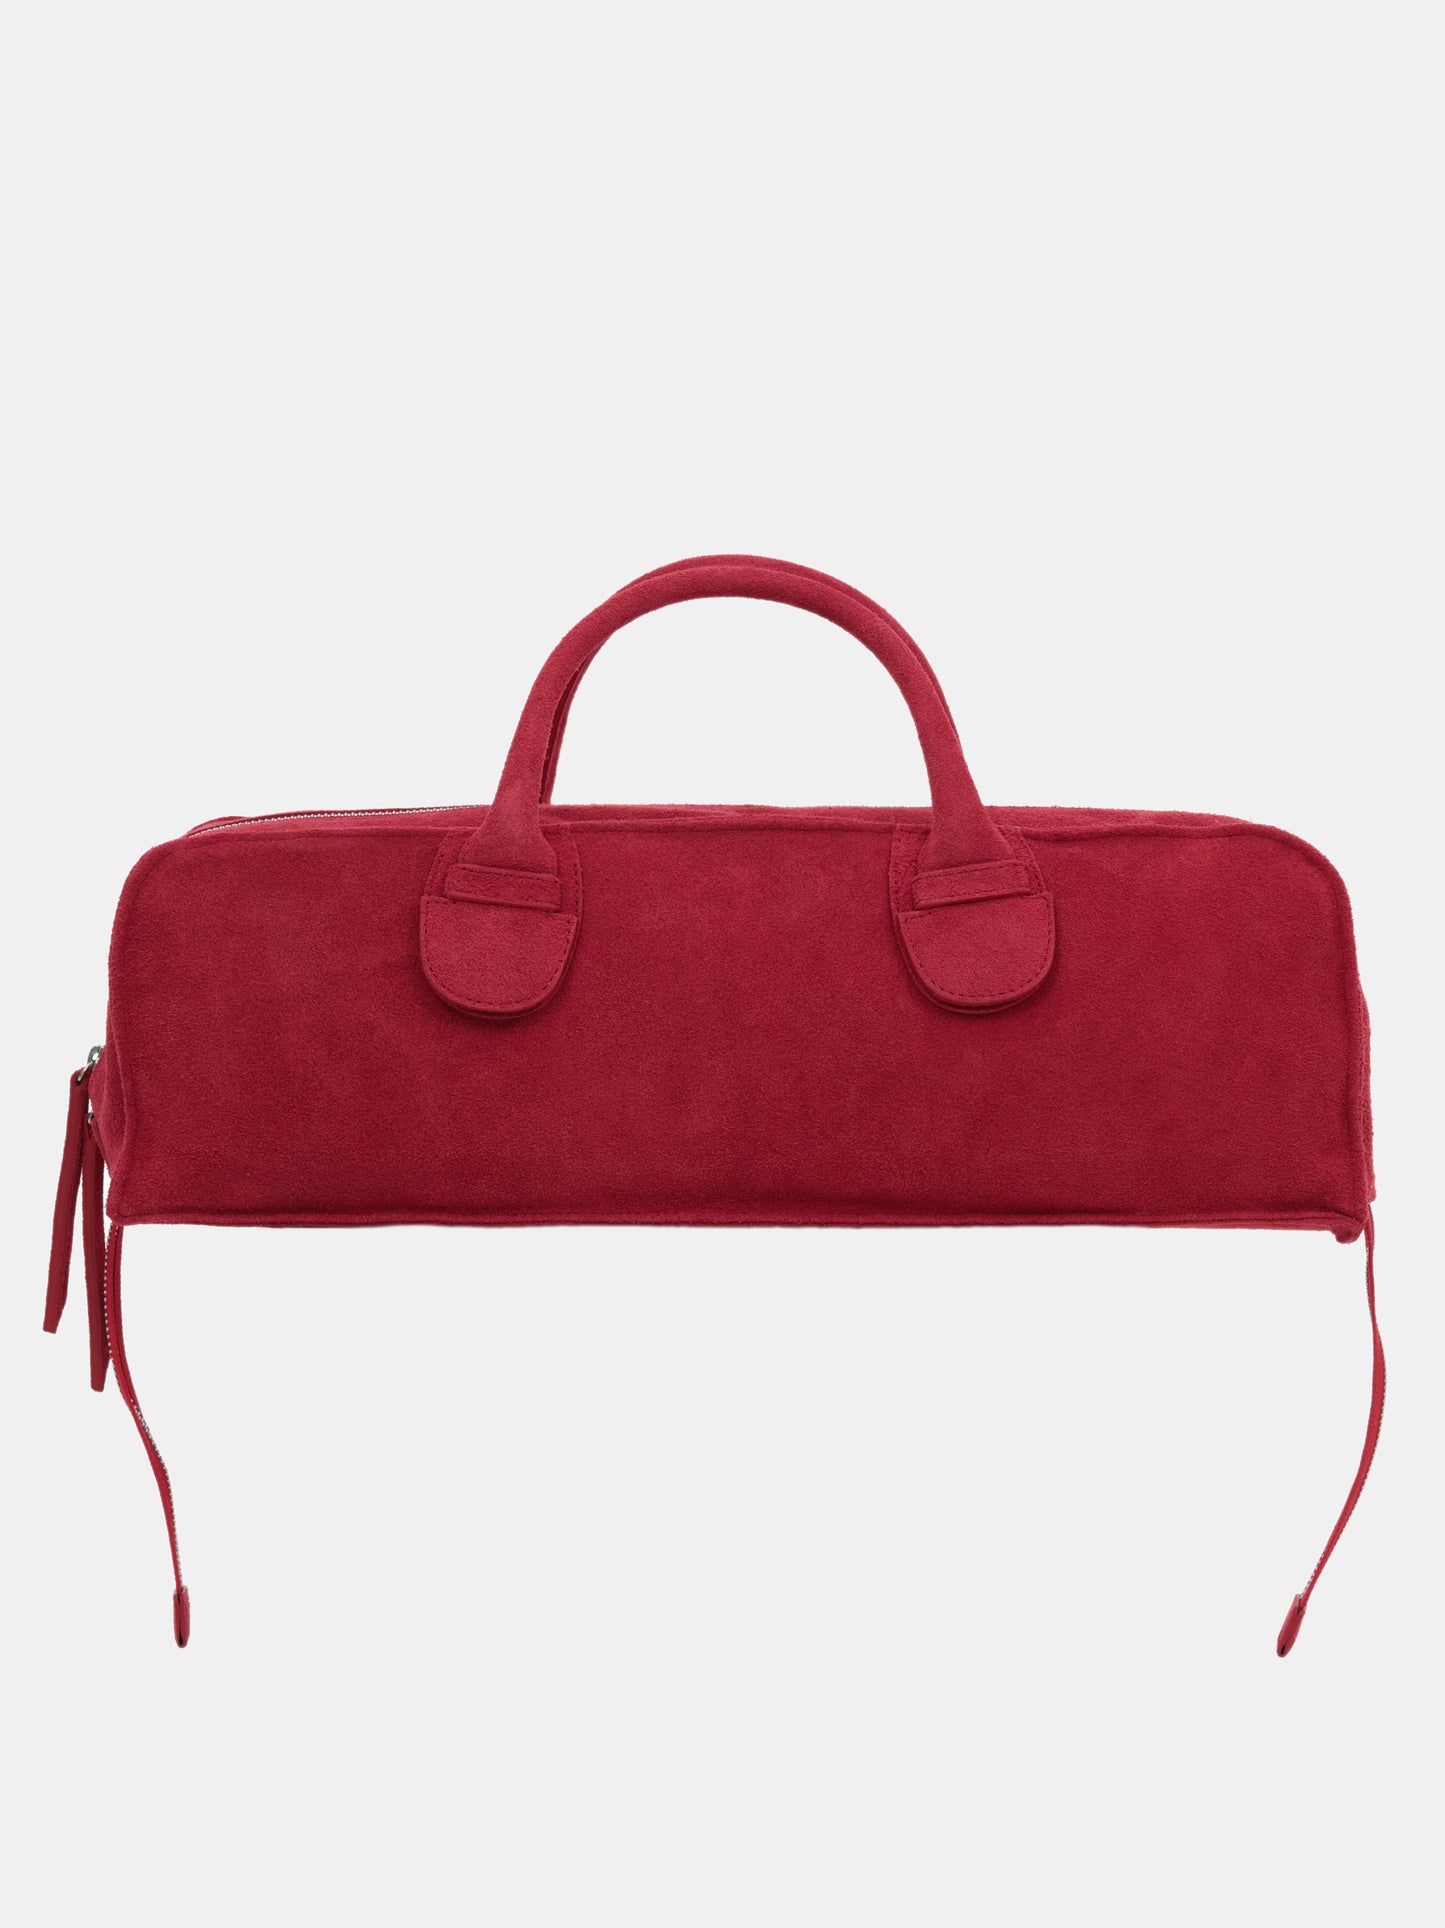 Leather Suede Rectangular Handbag, Red